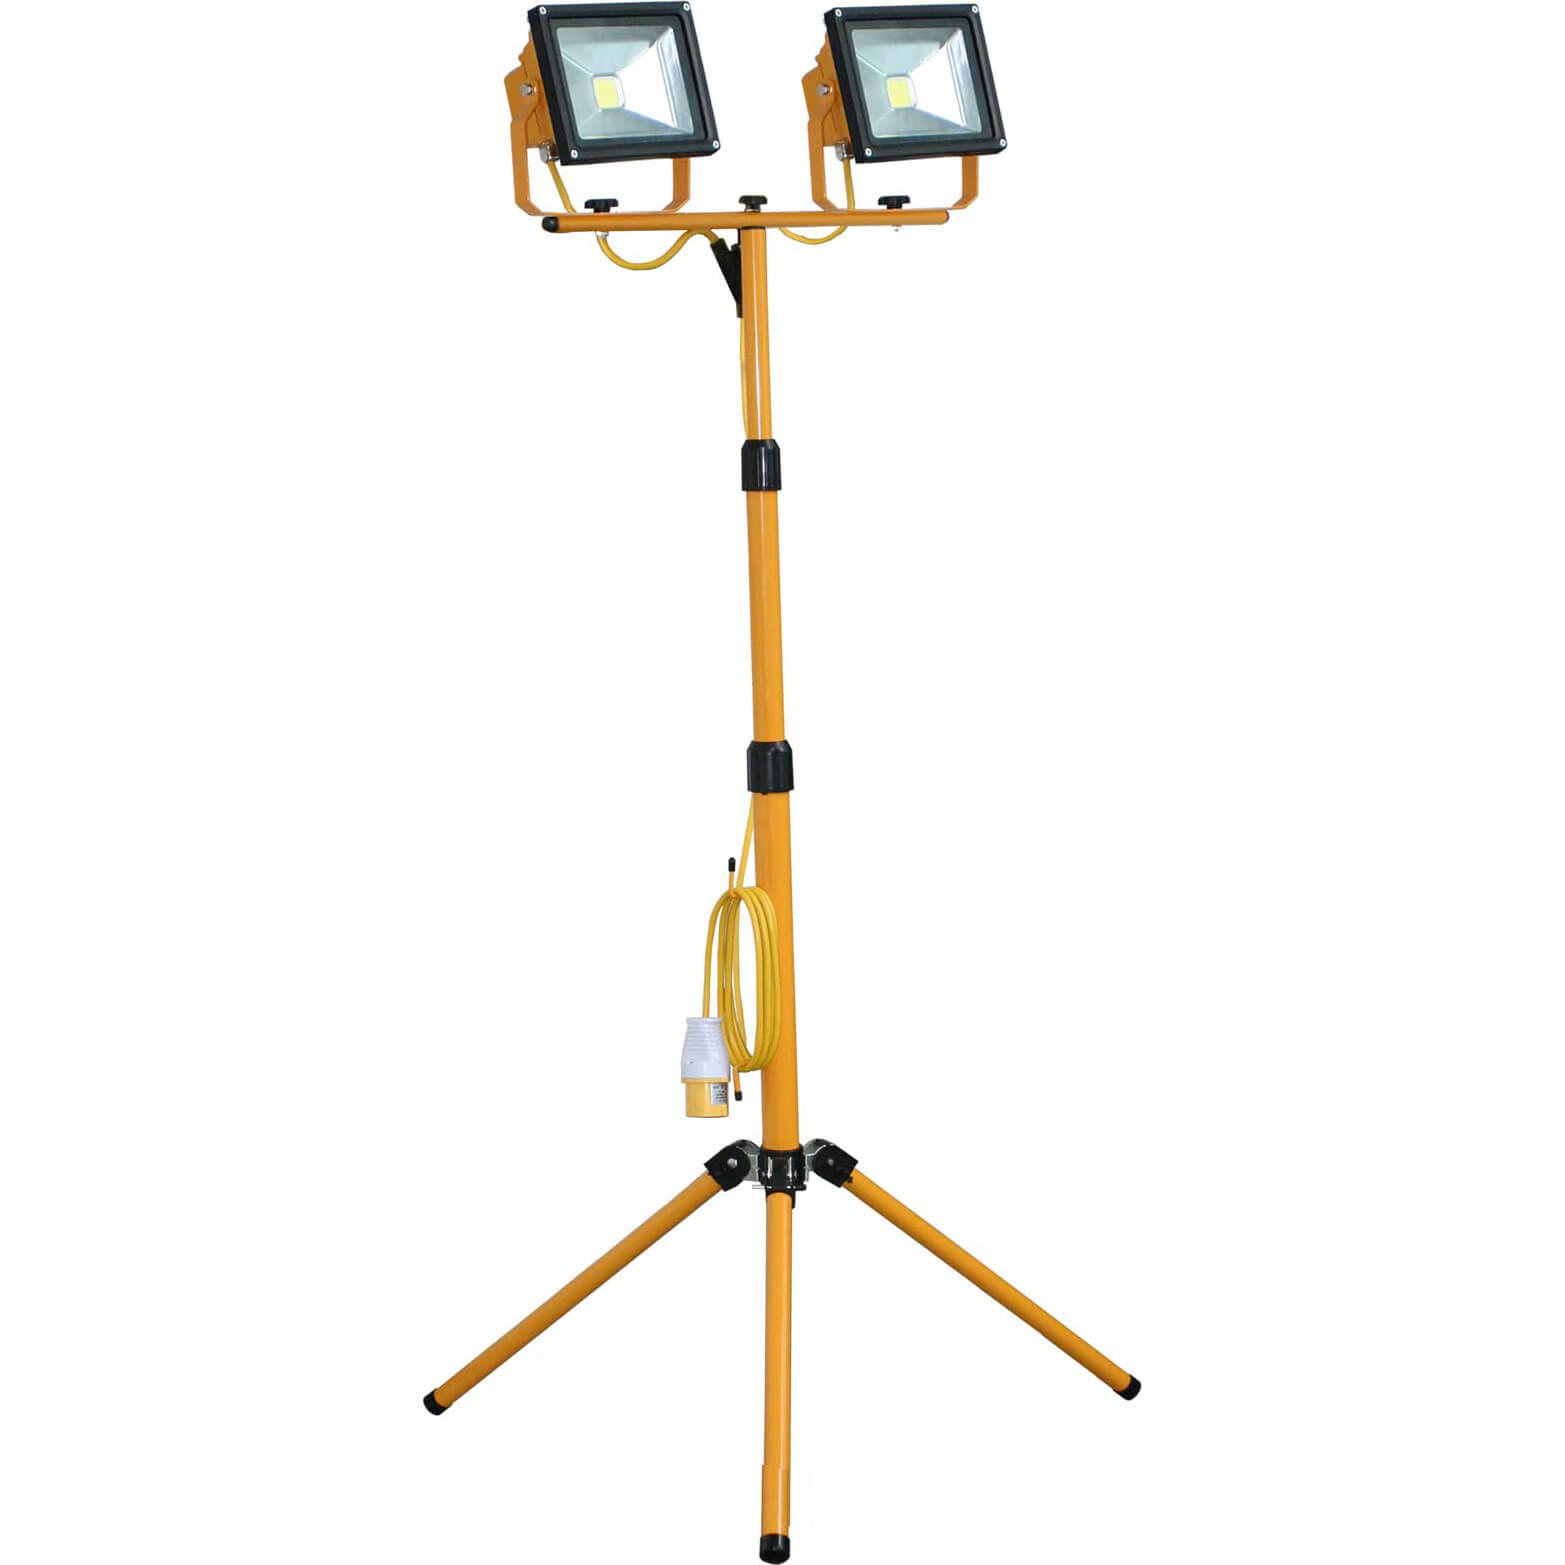 Photos - Floodlight / Garden Lamps Sirius LED Twin Tripod Floodlight 110v SP-17192 